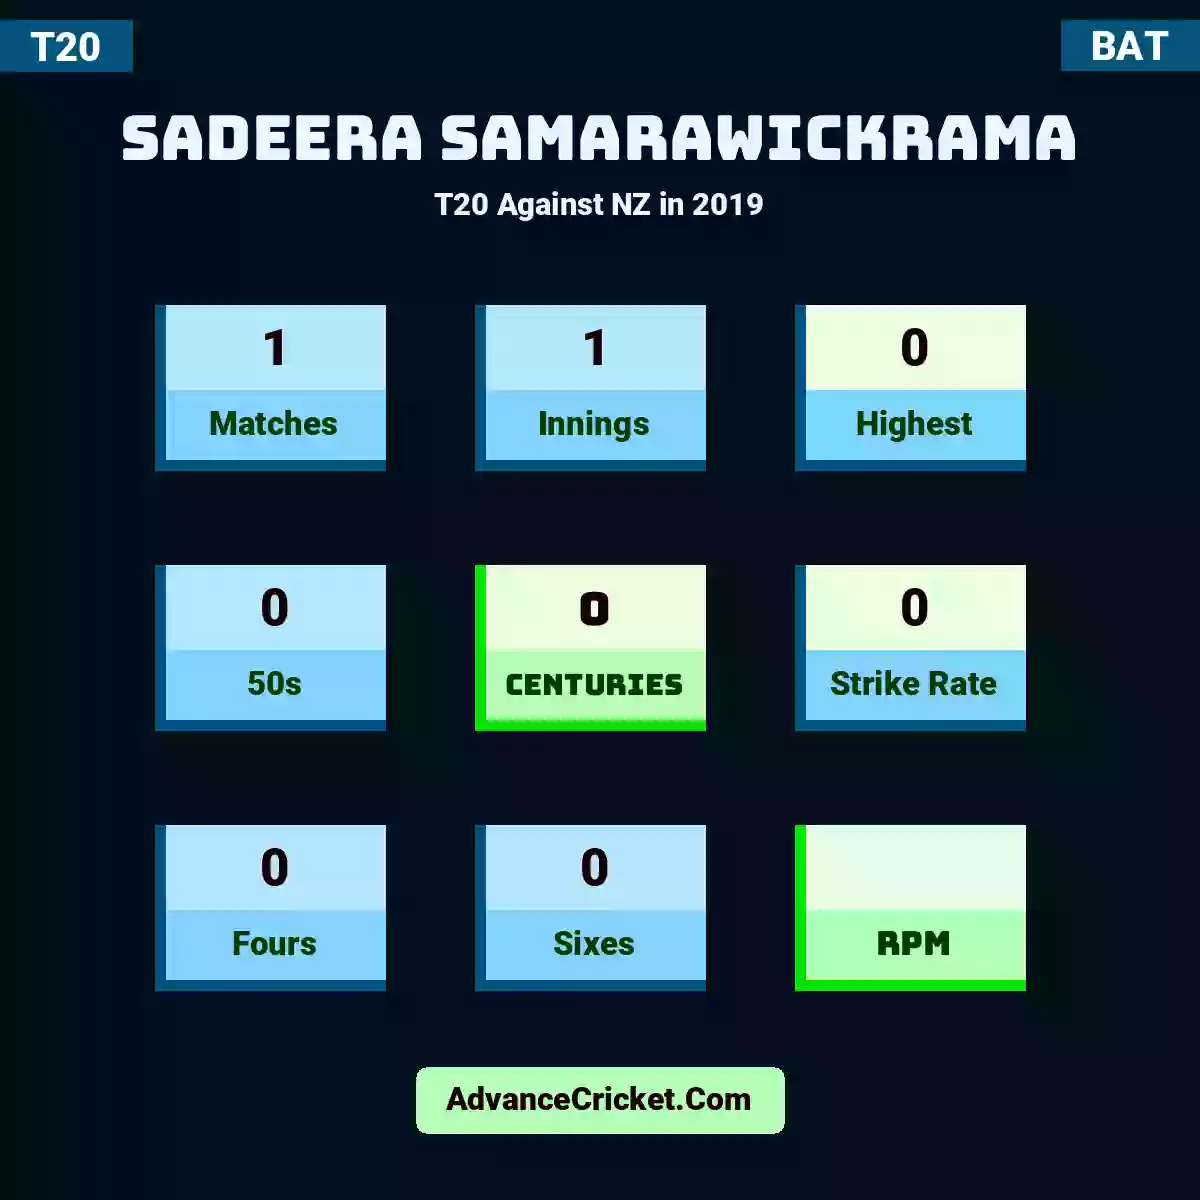 Sadeera Samarawickrama T20  Against NZ in 2019, Sadeera Samarawickrama played 1 matches, scored 0 runs as highest, 0 half-centuries, and 0 centuries, with a strike rate of 0. S.Samarawickrama hit 0 fours and 0 sixes.